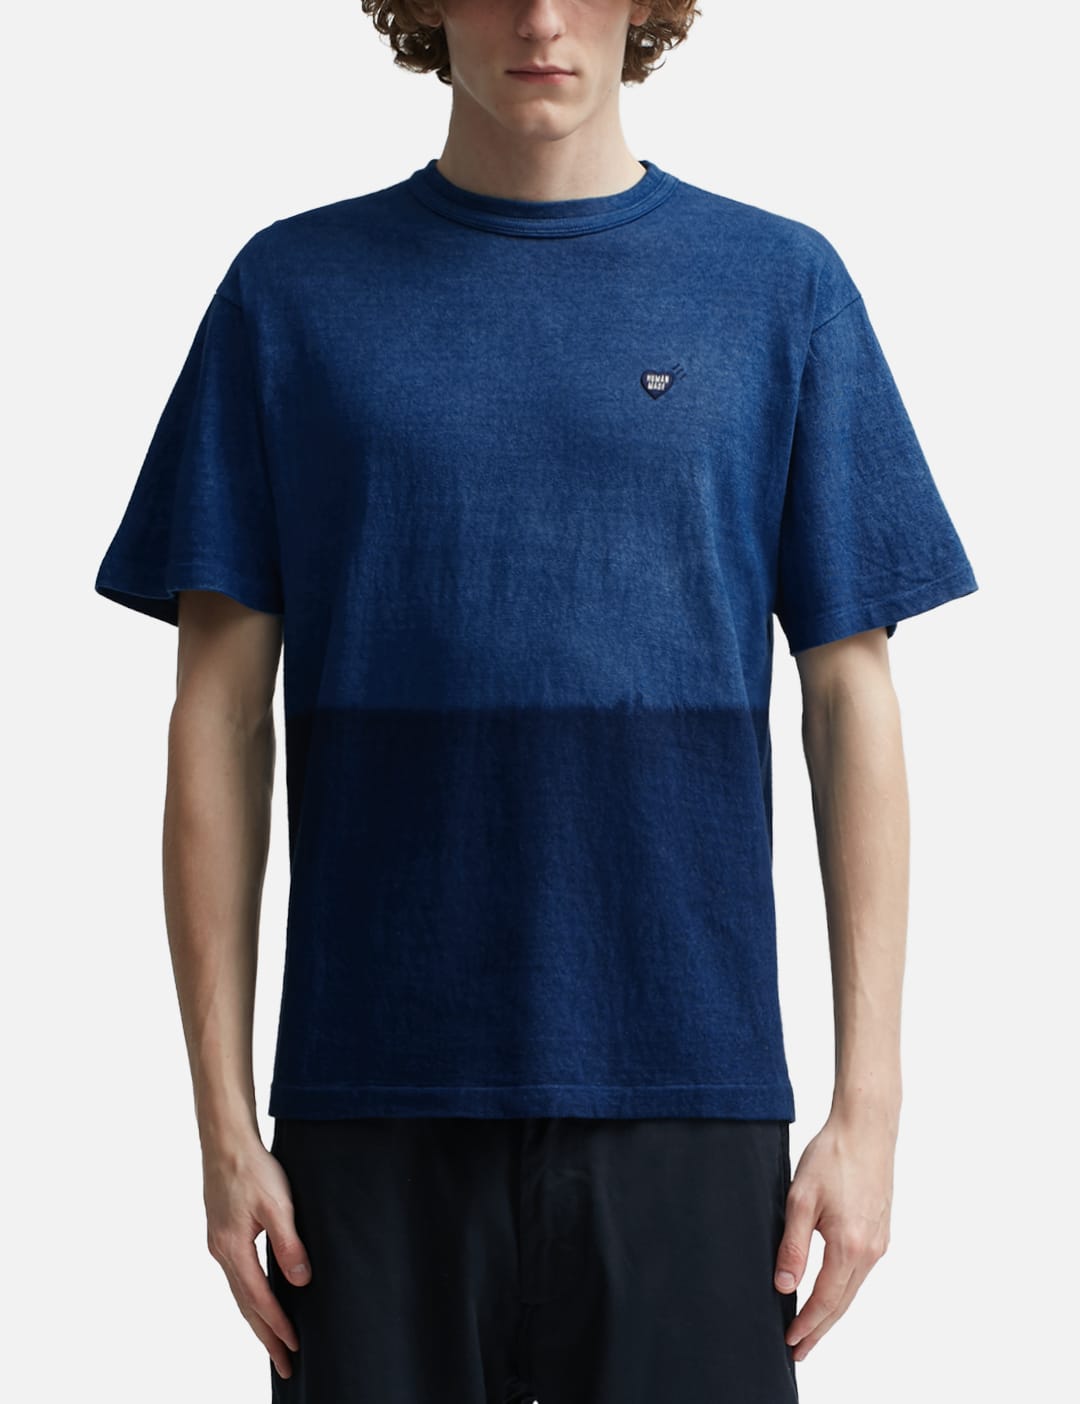 Human Made - Indigo Dyed T-shirt #1 | HBX - Globally Curated